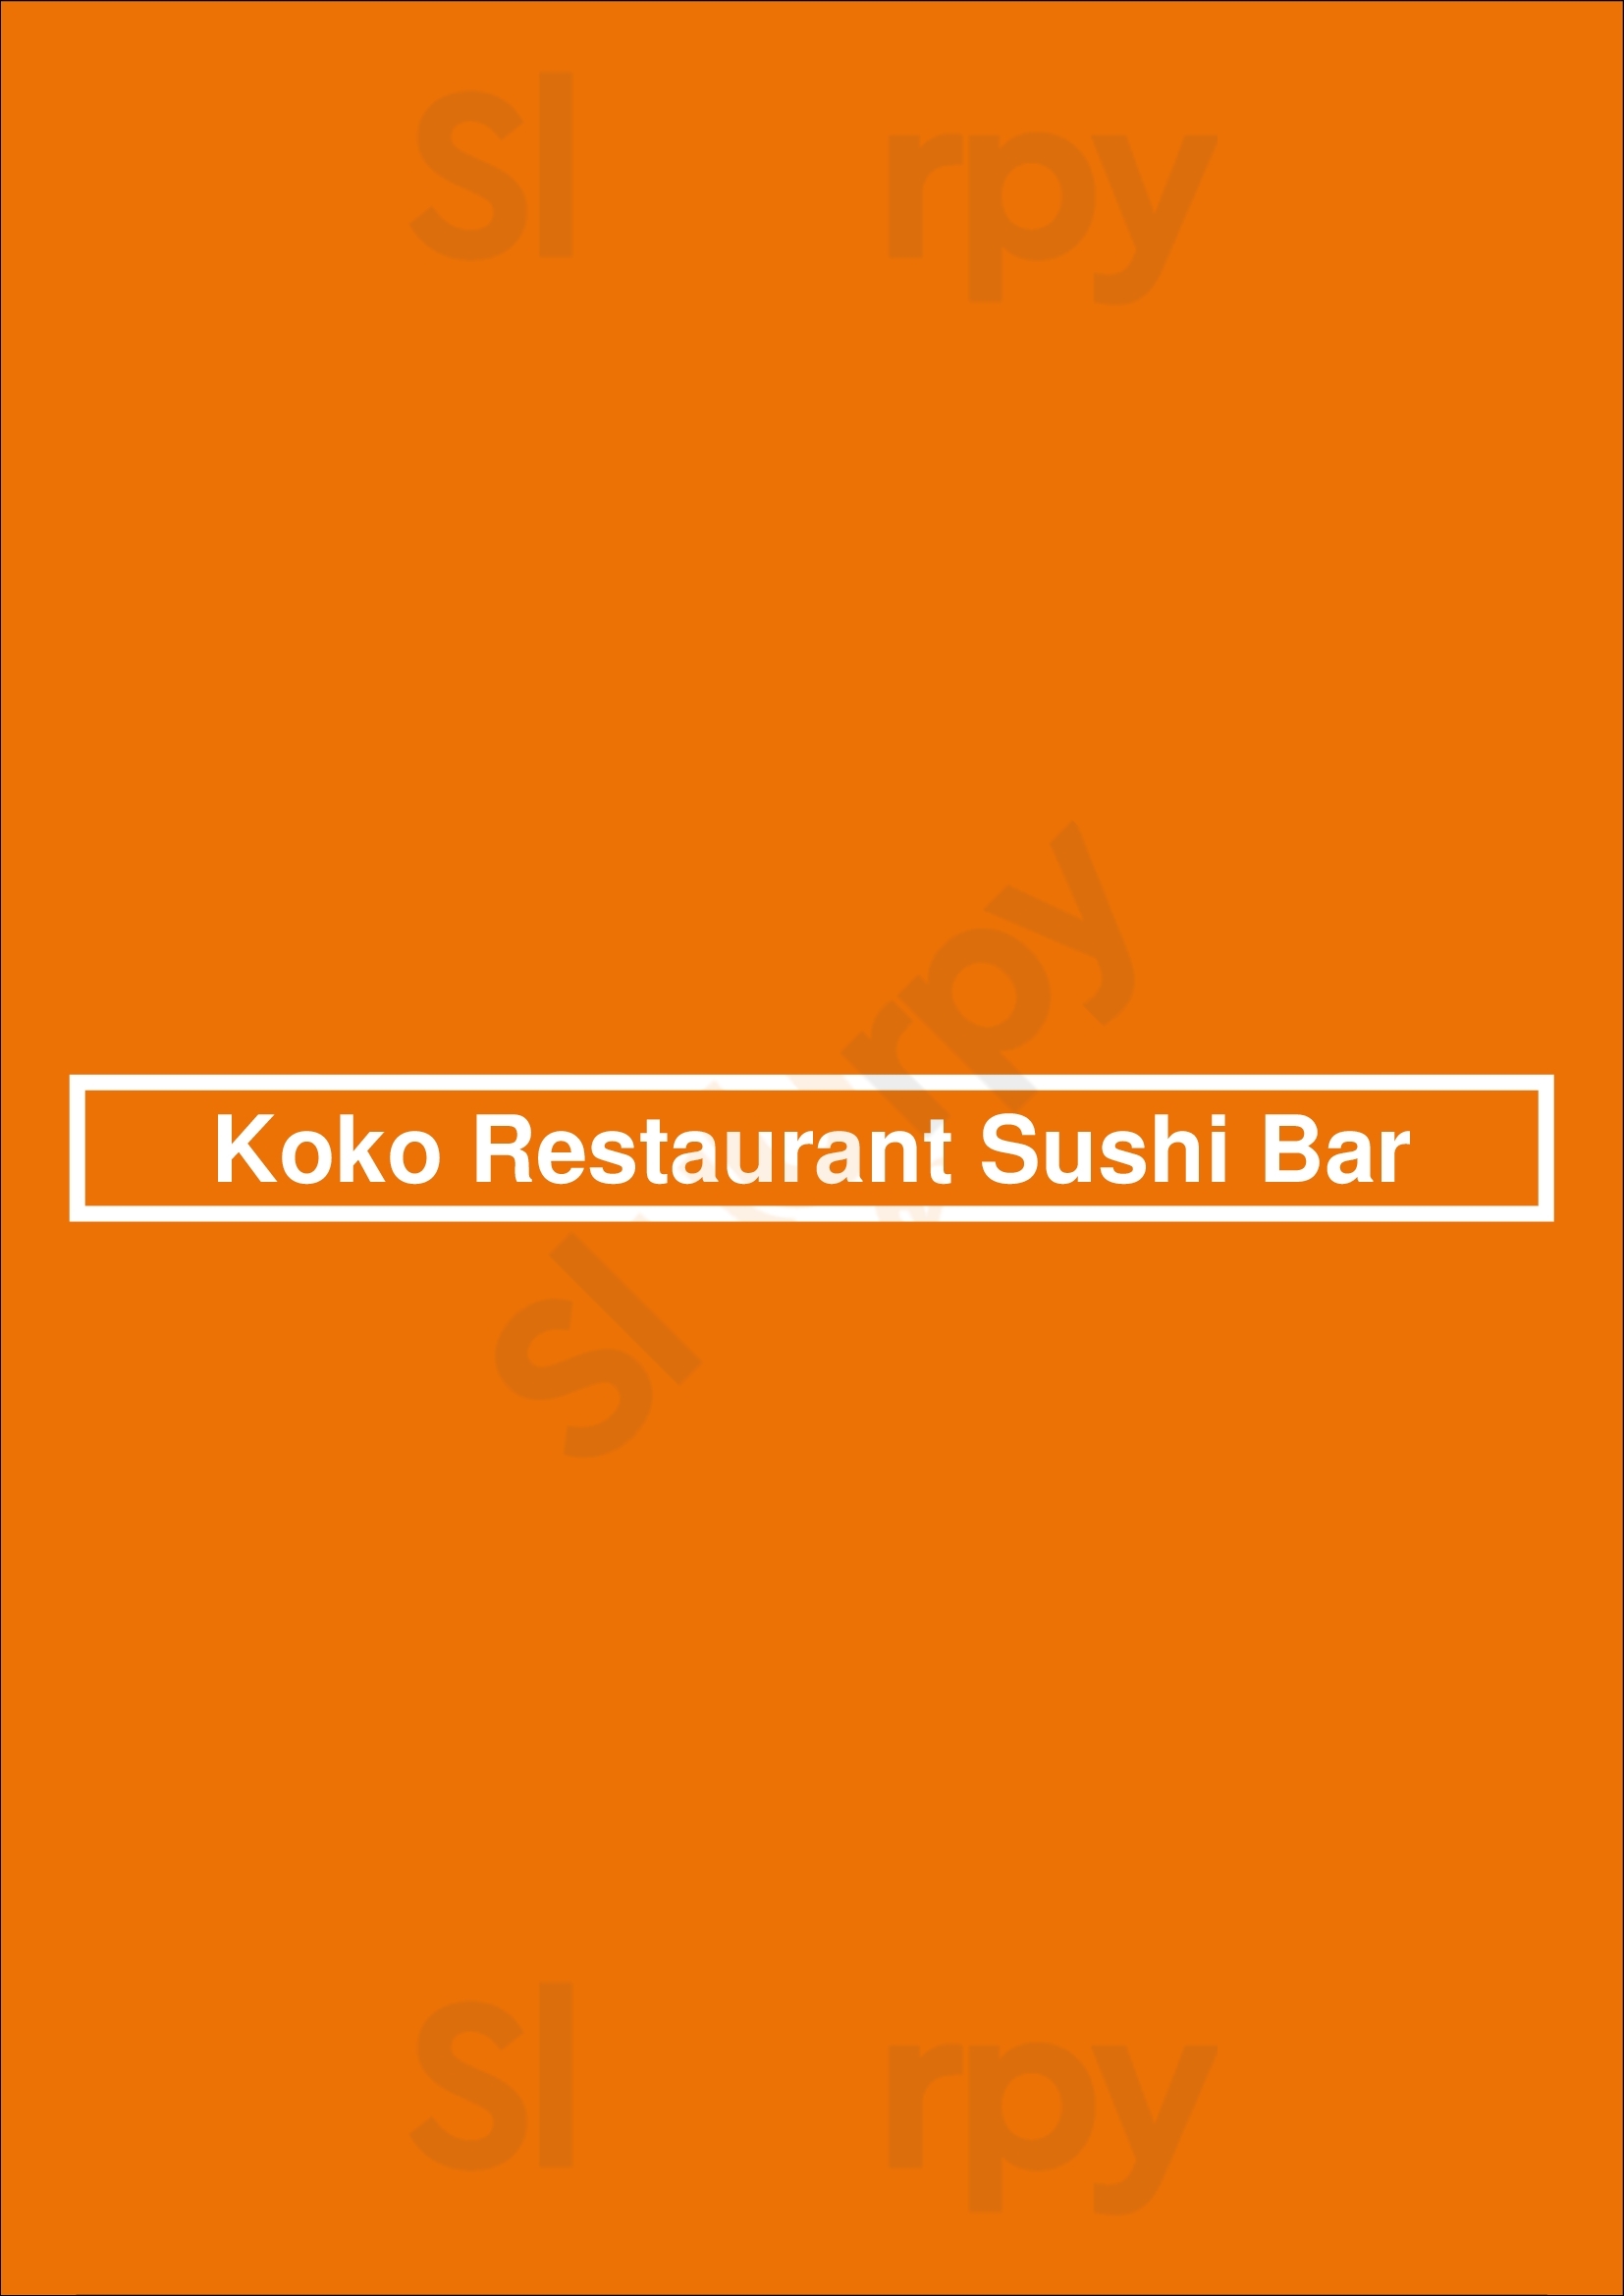 Koko Restaurant Sushi Bar Lisboa Menu - 1